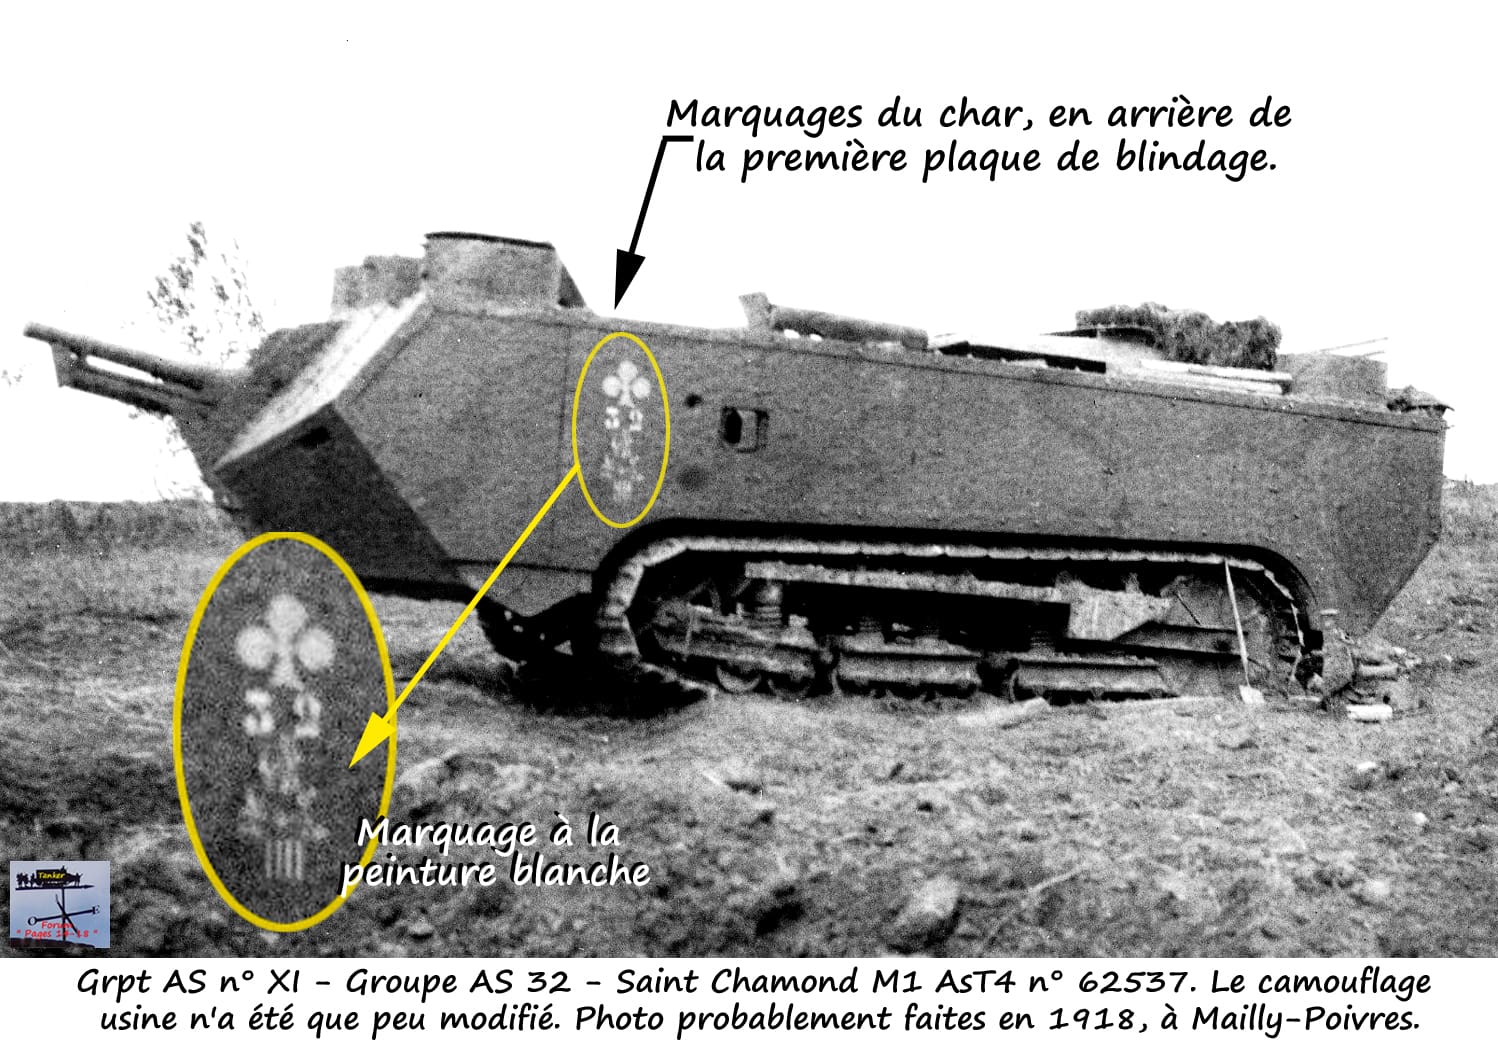 Grpt XI - AS 32 - St Chamond M1 AsTx n° 62537 (01a)-min.jpg